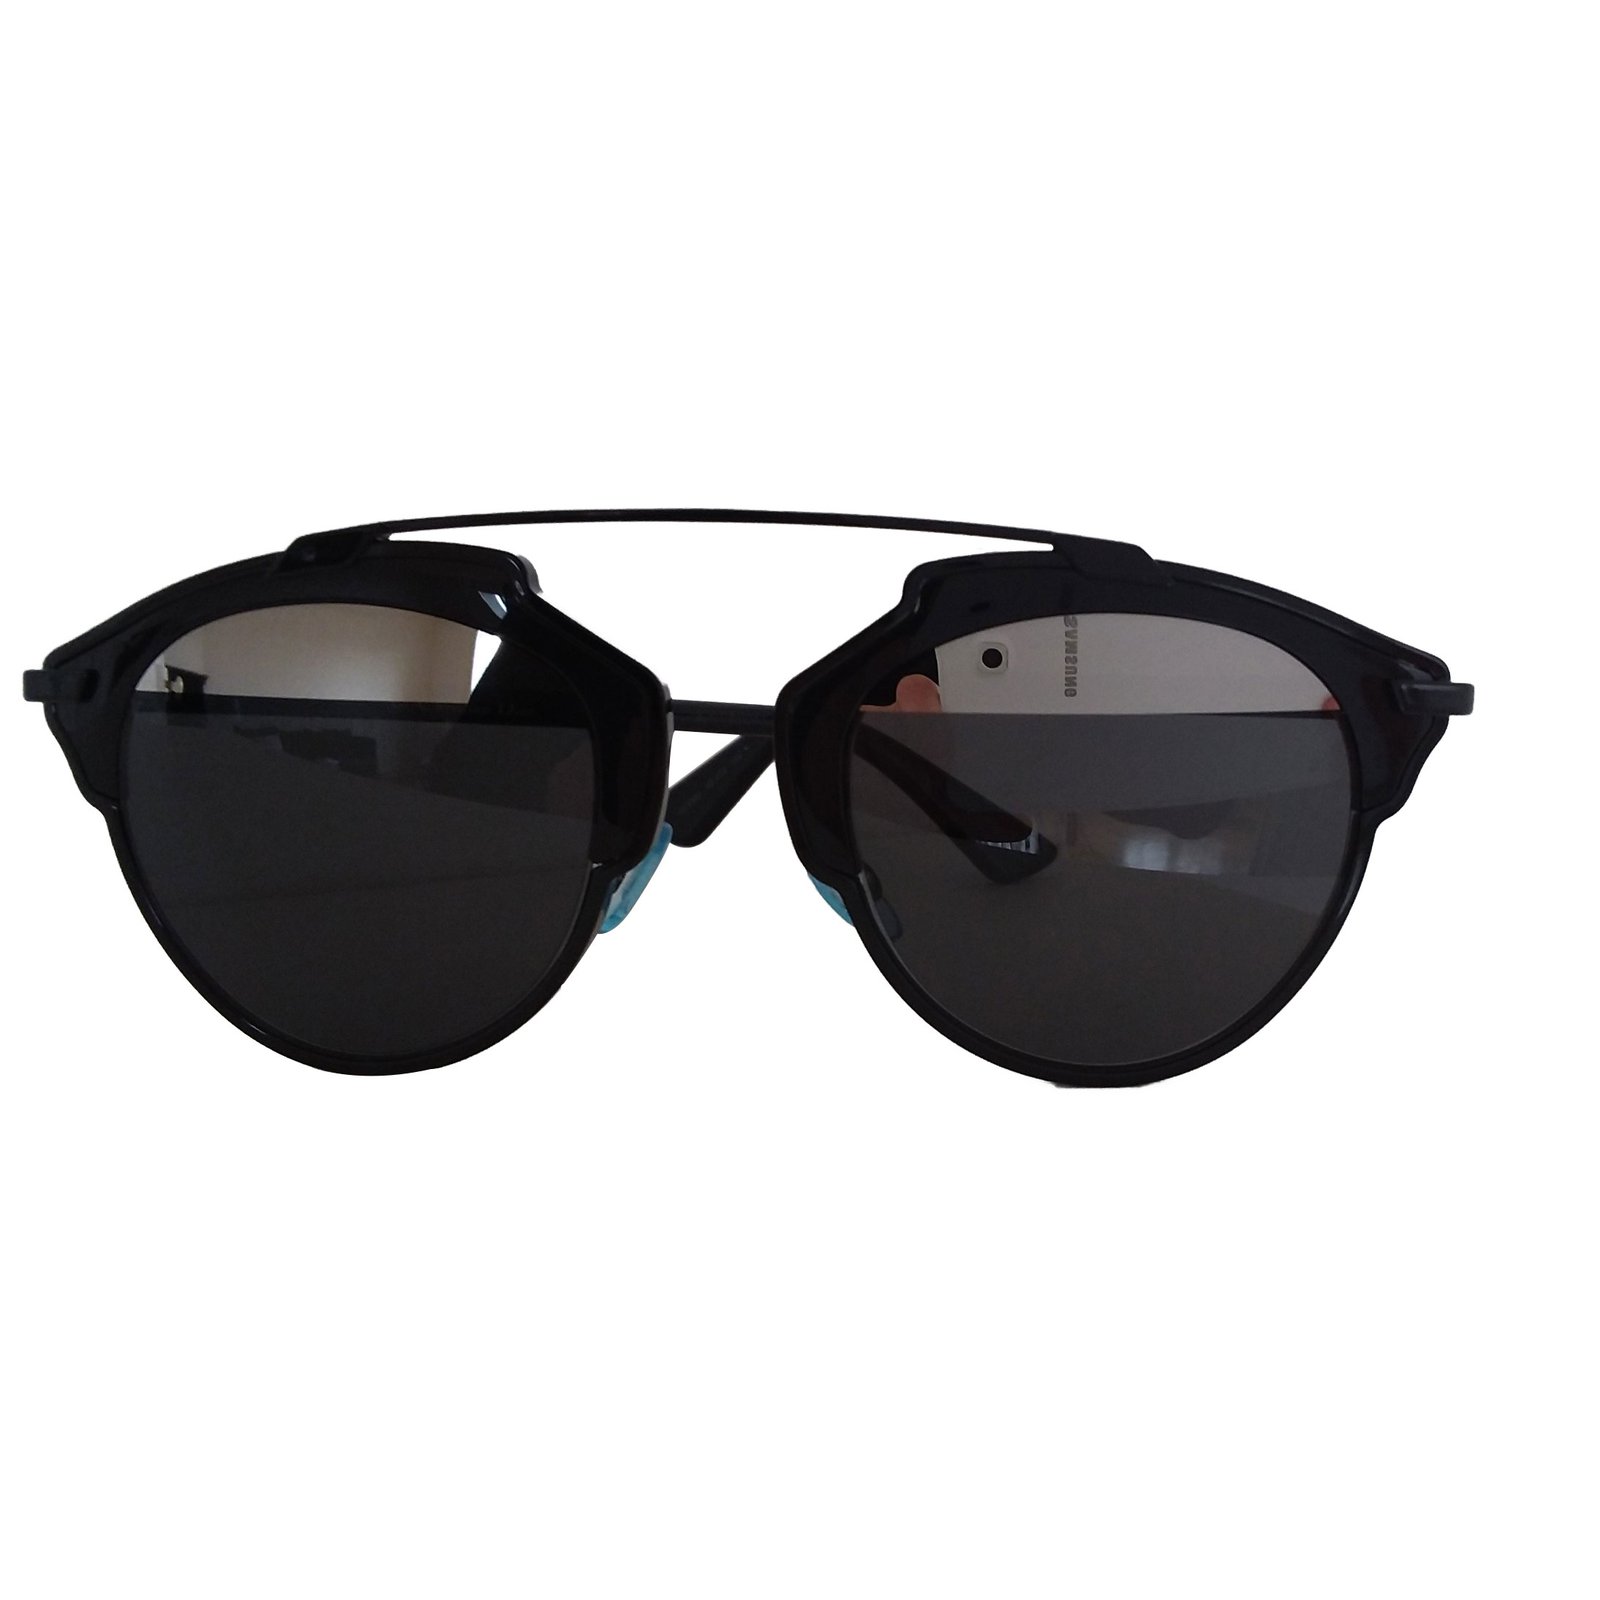 black christian dior sunglasses